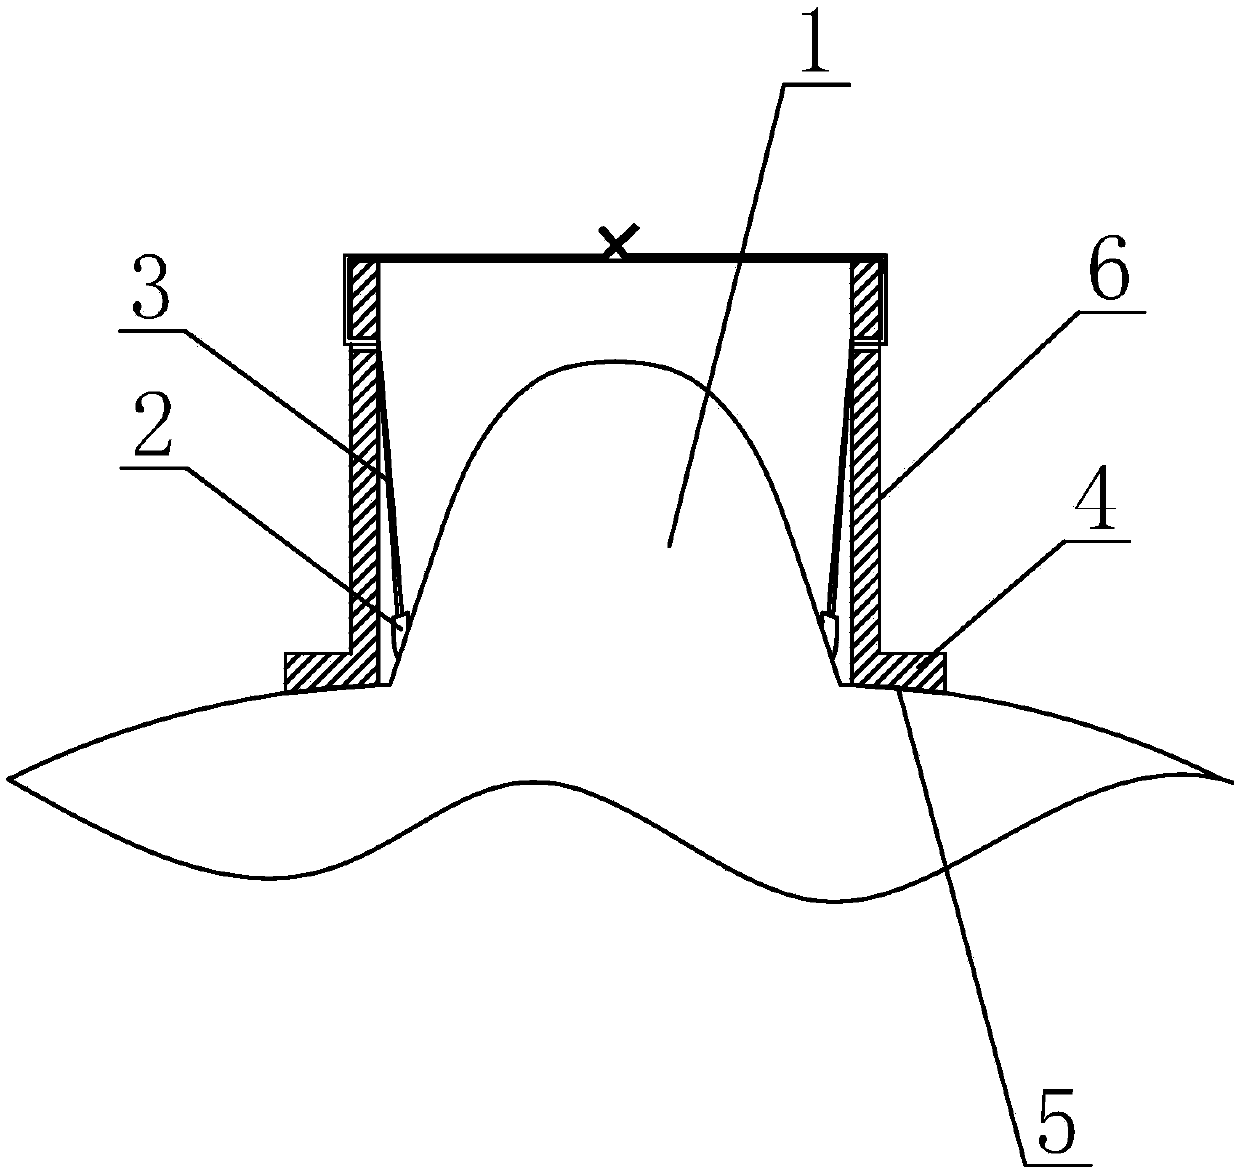 Method for performing nipple retraction correction through trocar